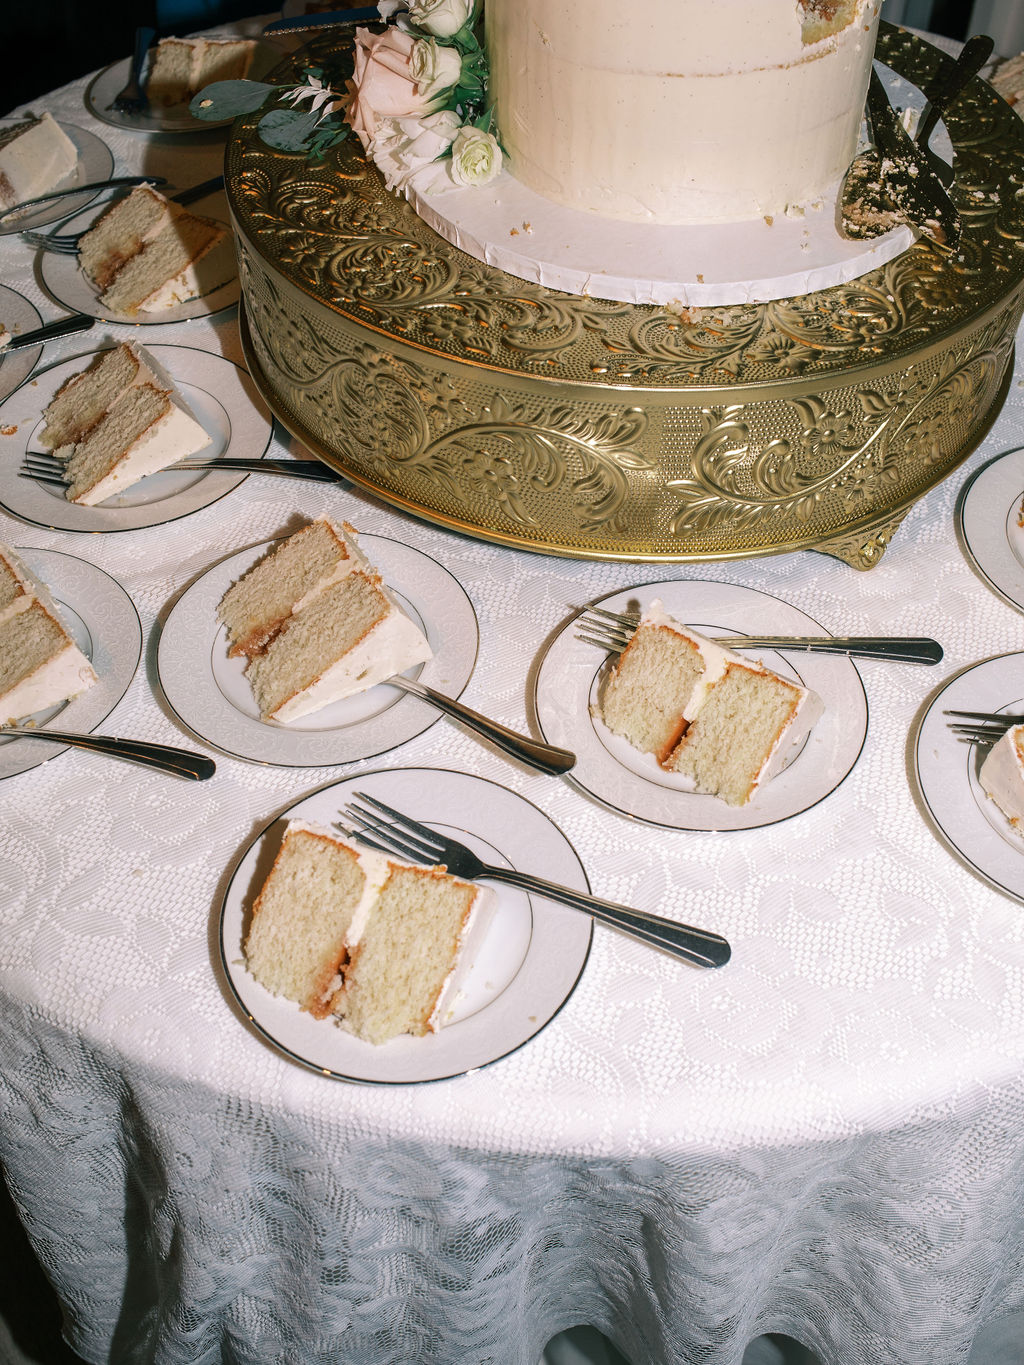 film photo of white wedding cake slices